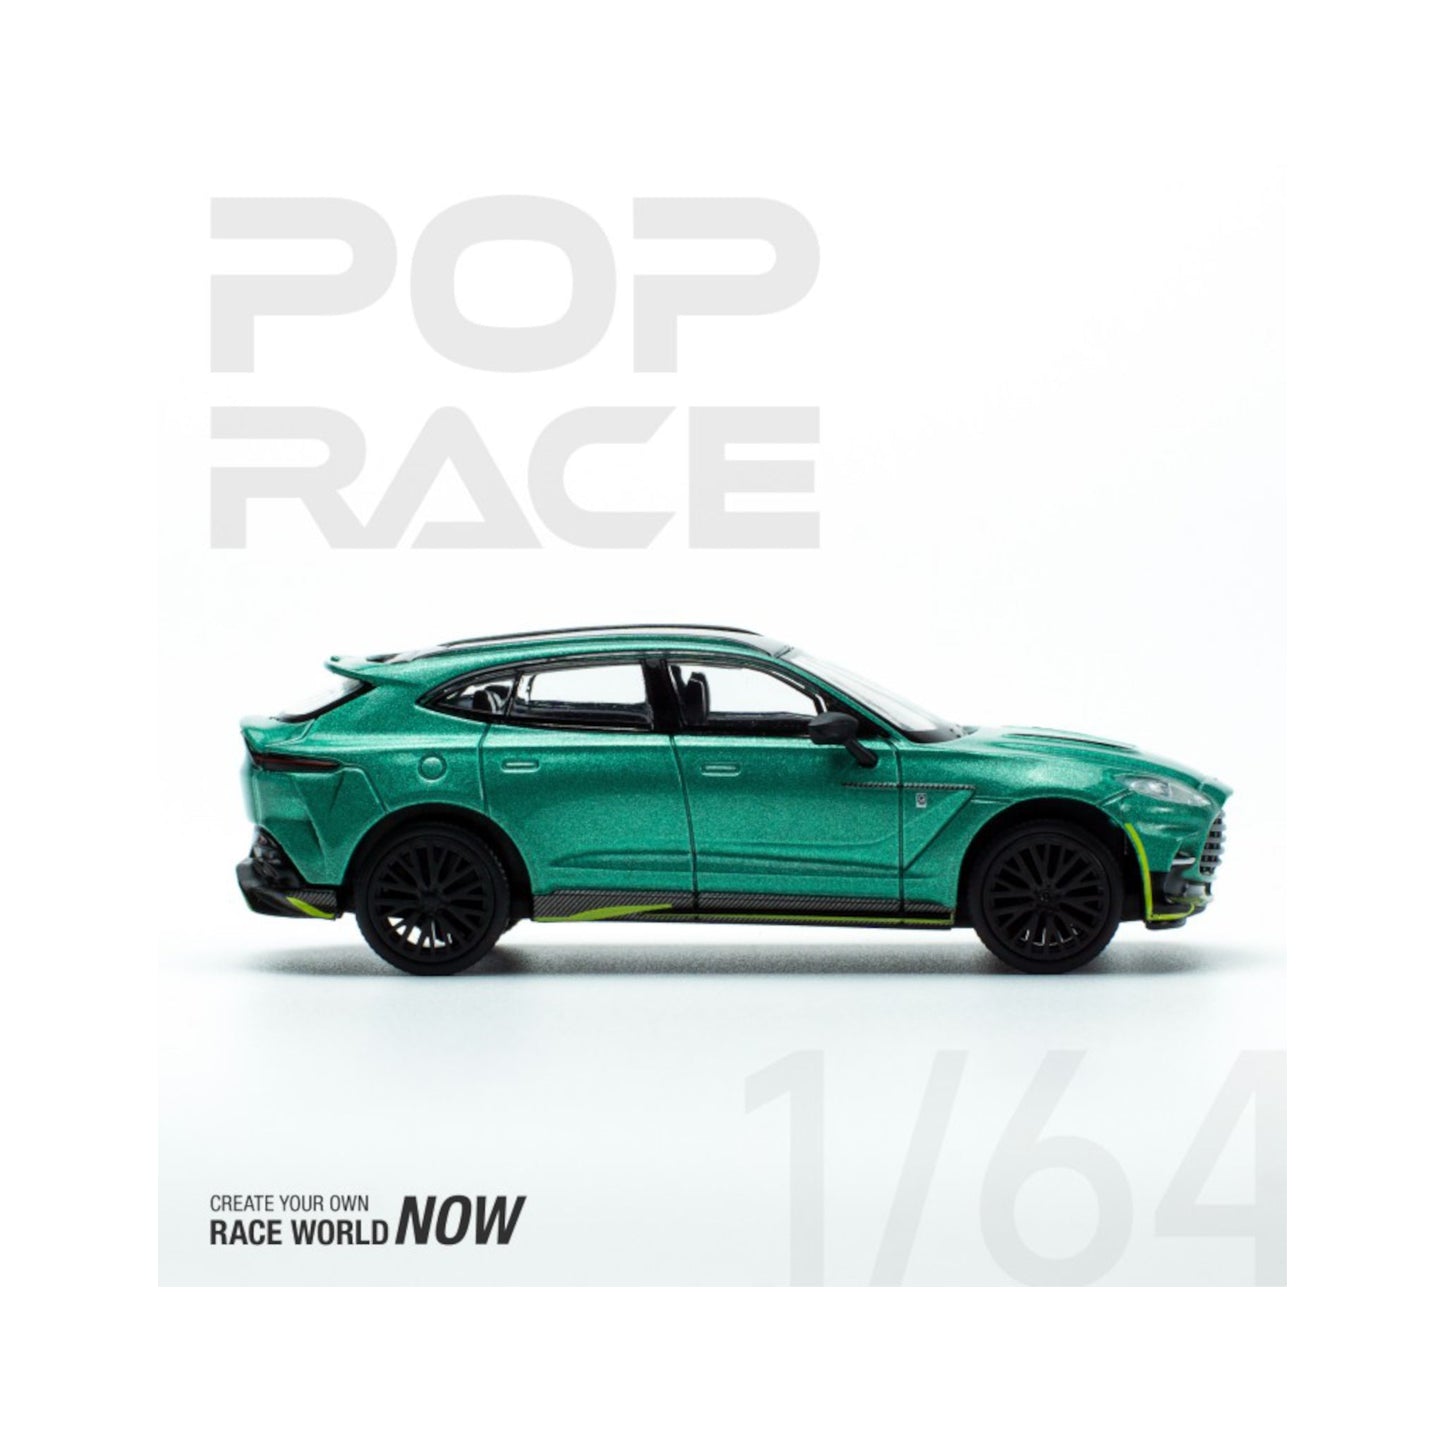 Aston Martin DBX Racing Green Pop Race 1/64 - PR640016